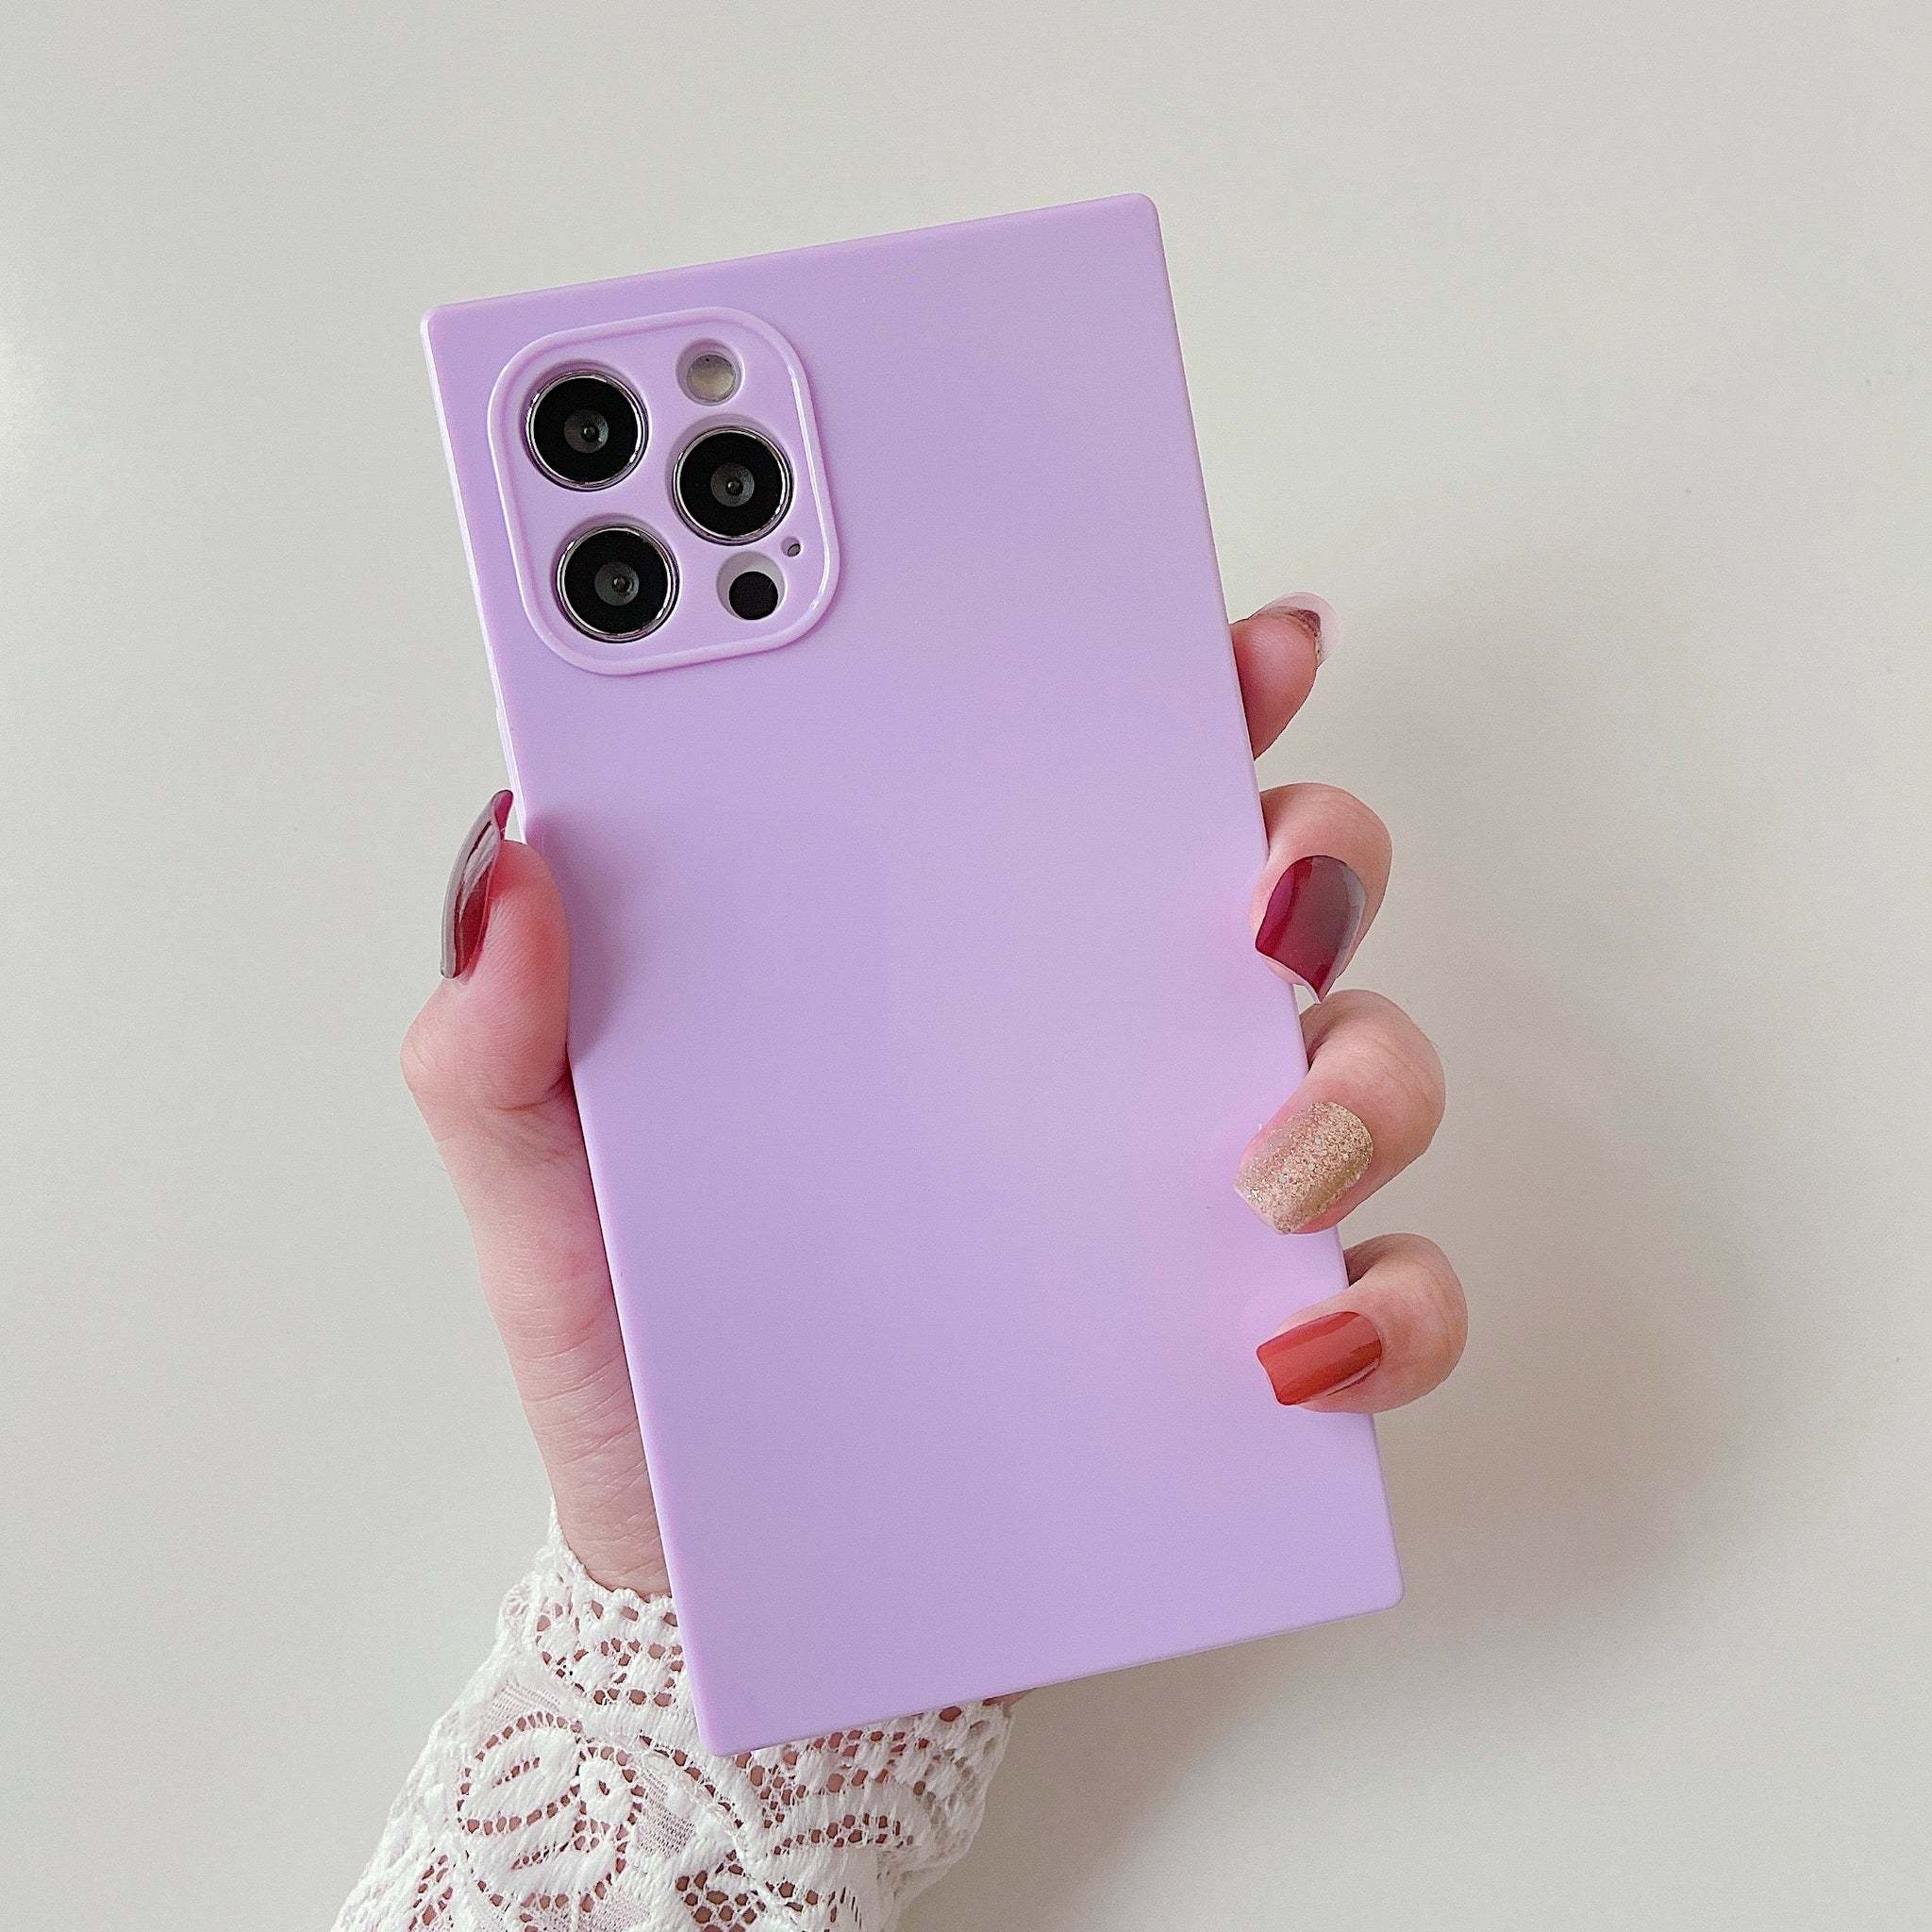 iPhone 11 Pro Max Case Square Plain Color (Purple)